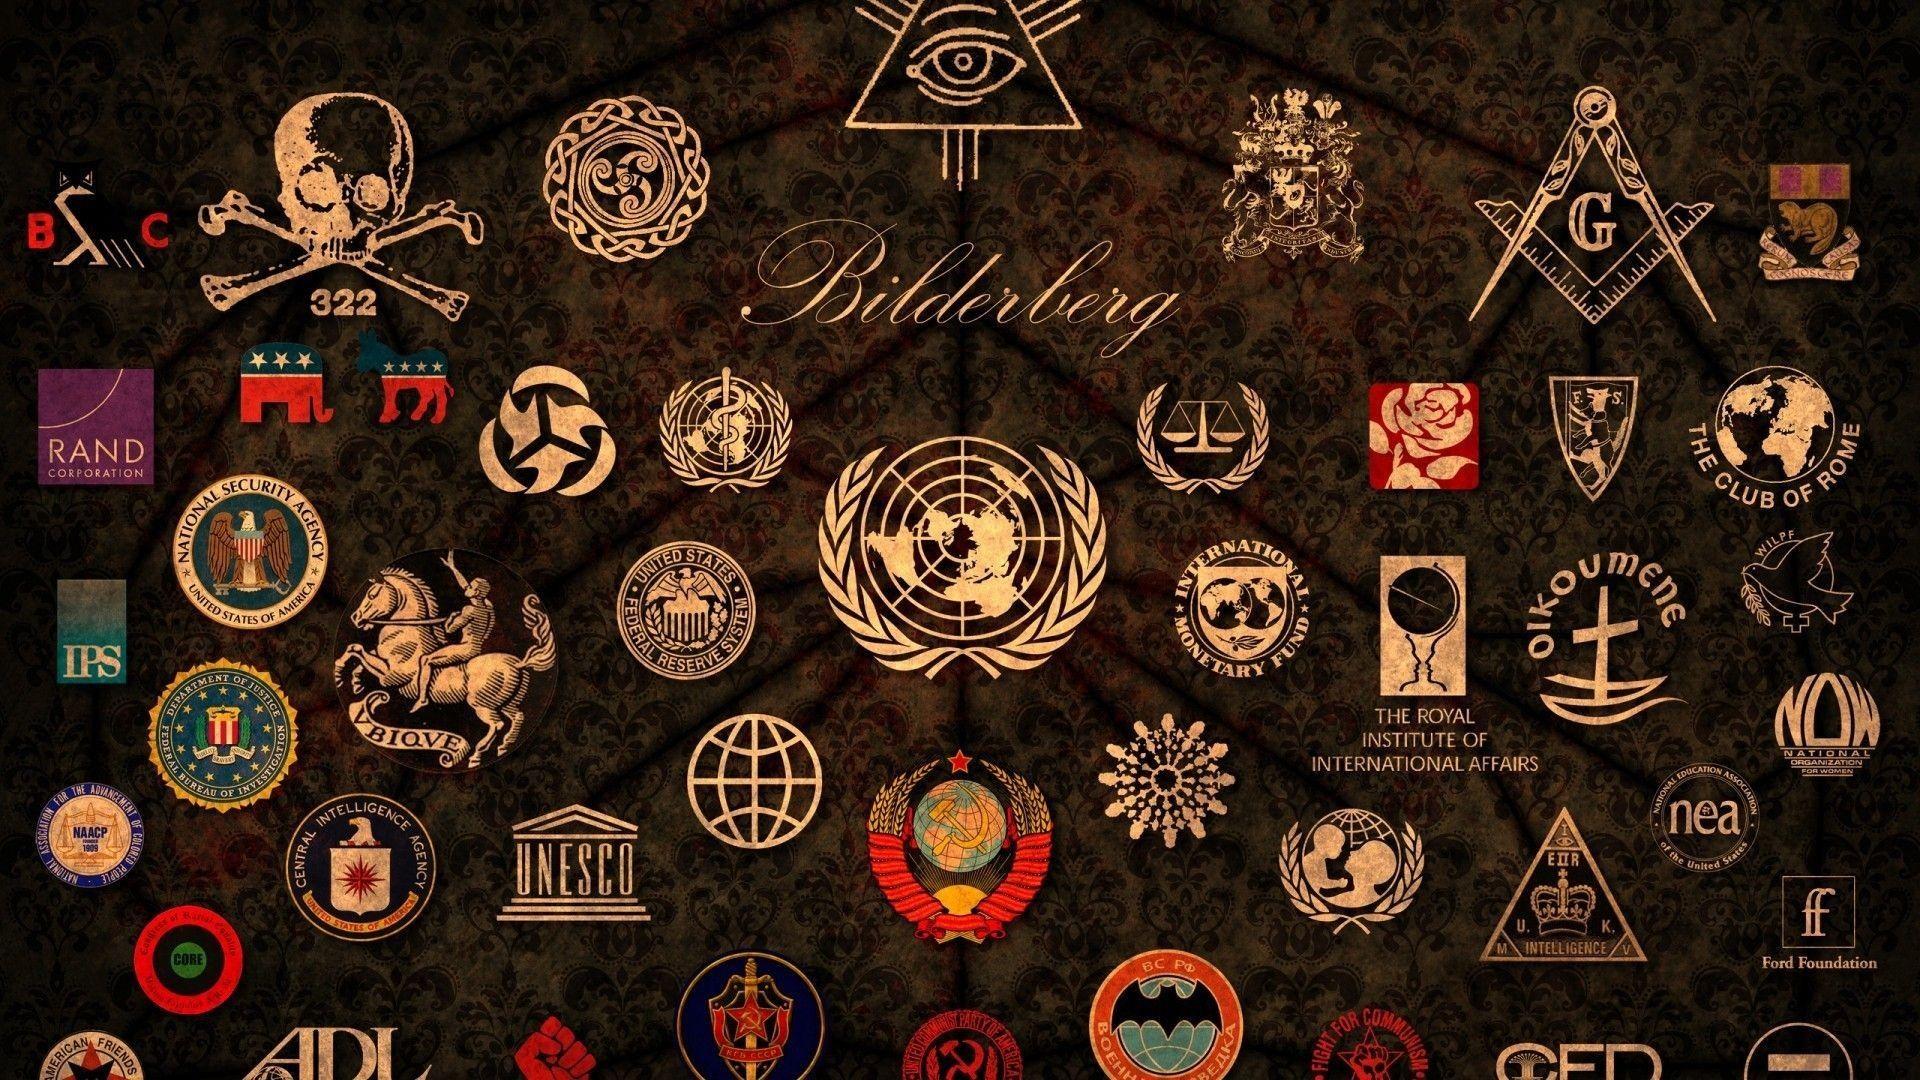 Illuminati wallpaper.com Wallpaper World